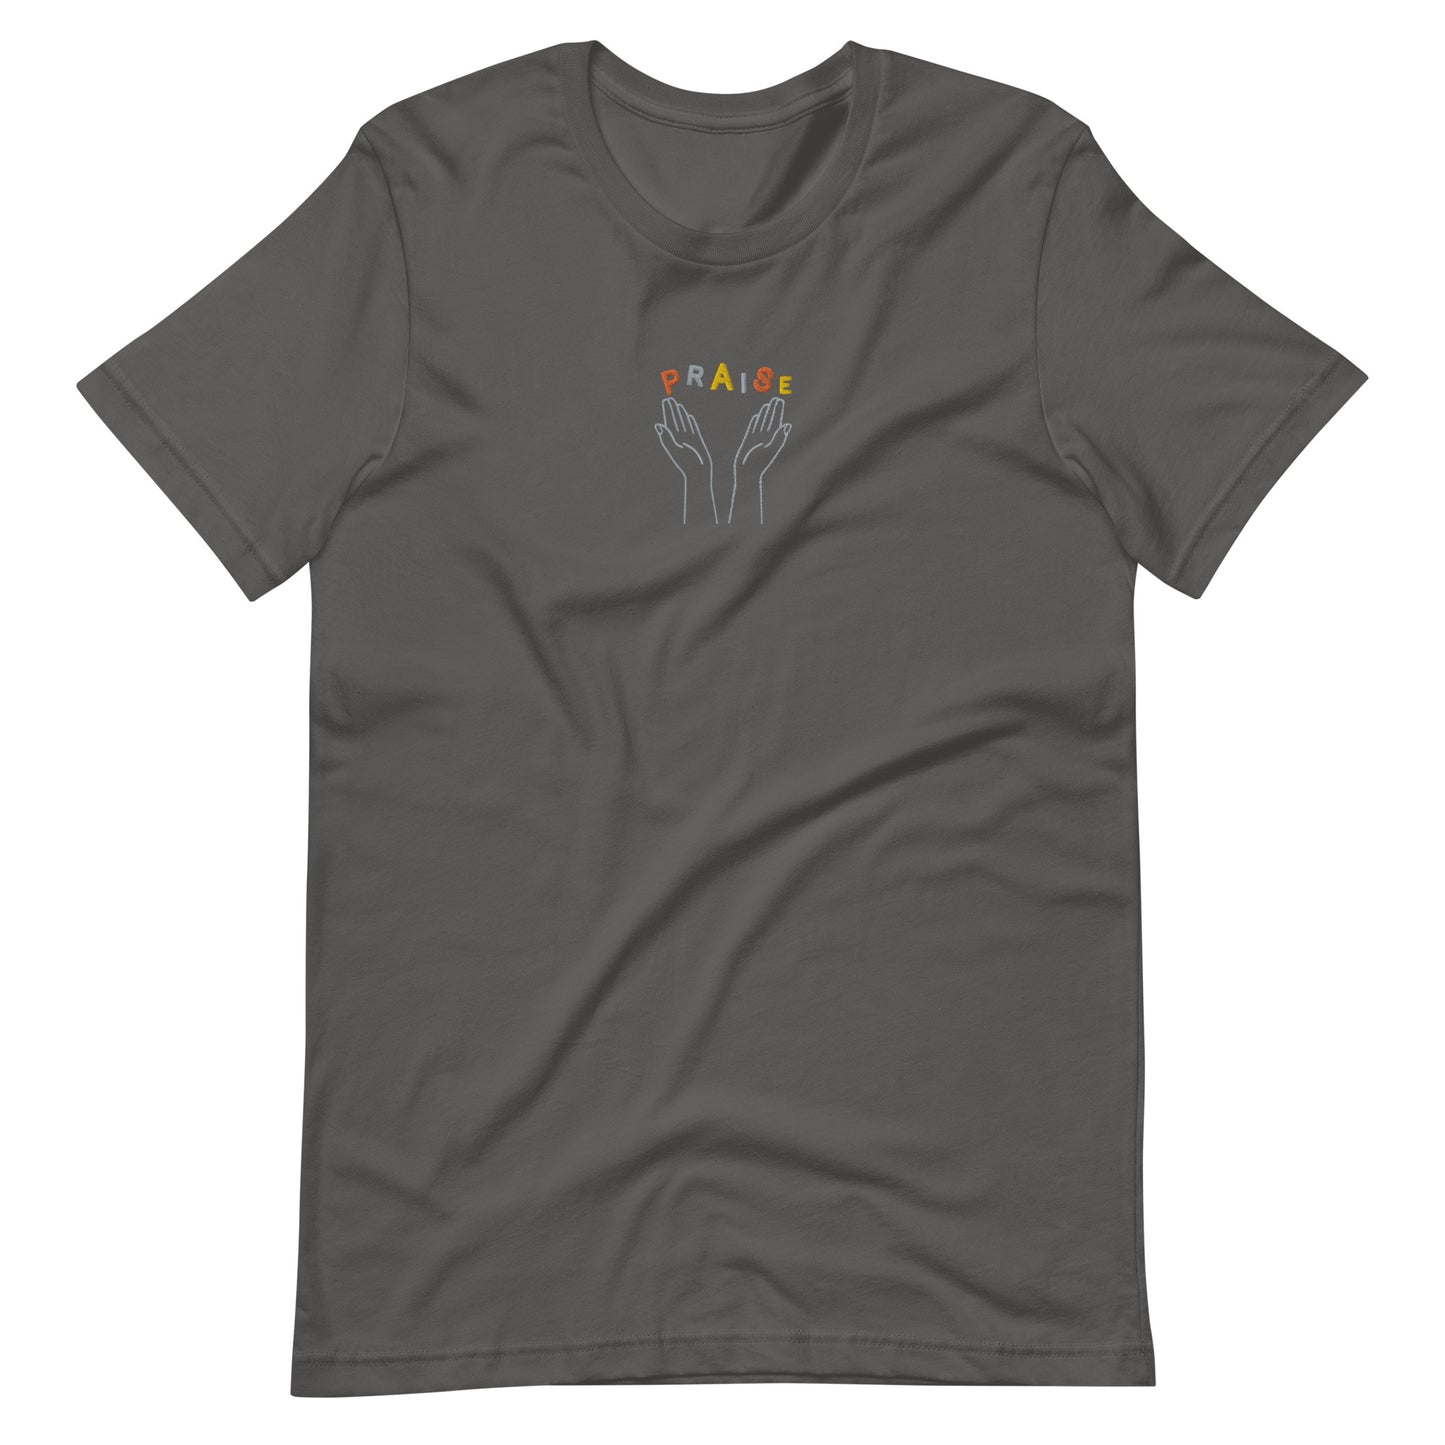 Praise Hands Unisex t-shirt - Asphalt / S - Shirts & Tops